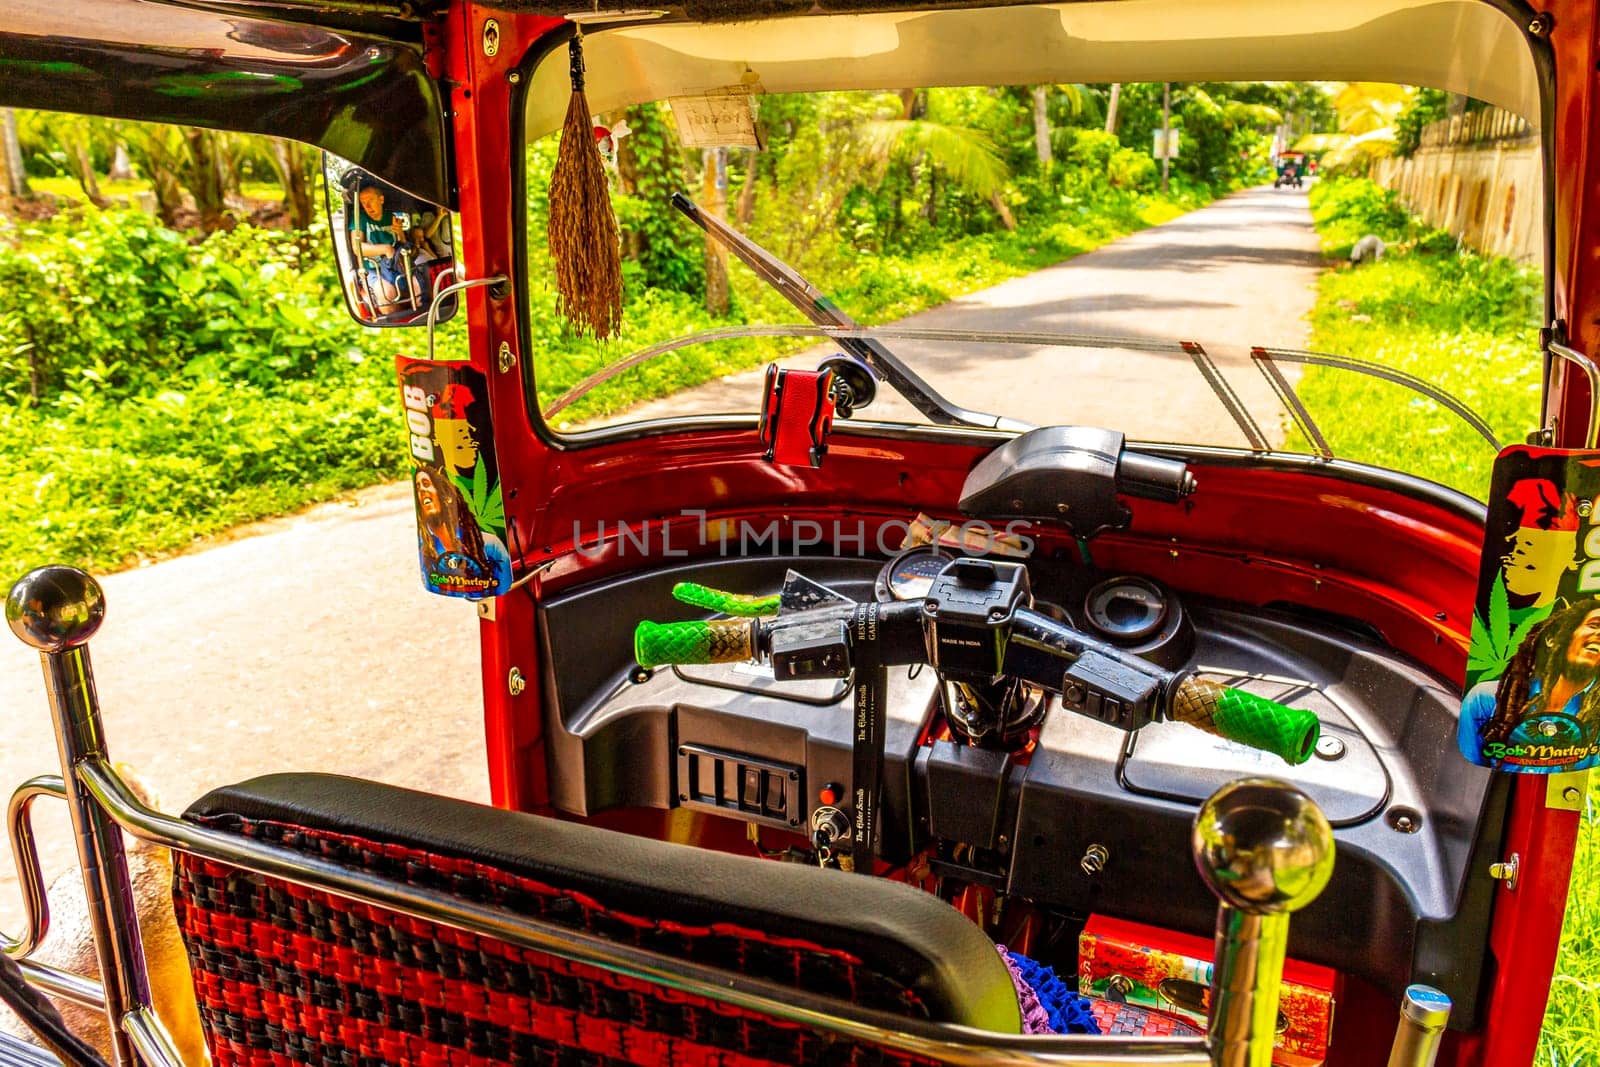 Bentota Beach Southern Province Sri Lanka 16. March 2018 Driving a red Rickshaw Tuk Tuk cab vehicle in Bentota Beach Galle District Southern Province Sri Lanka.